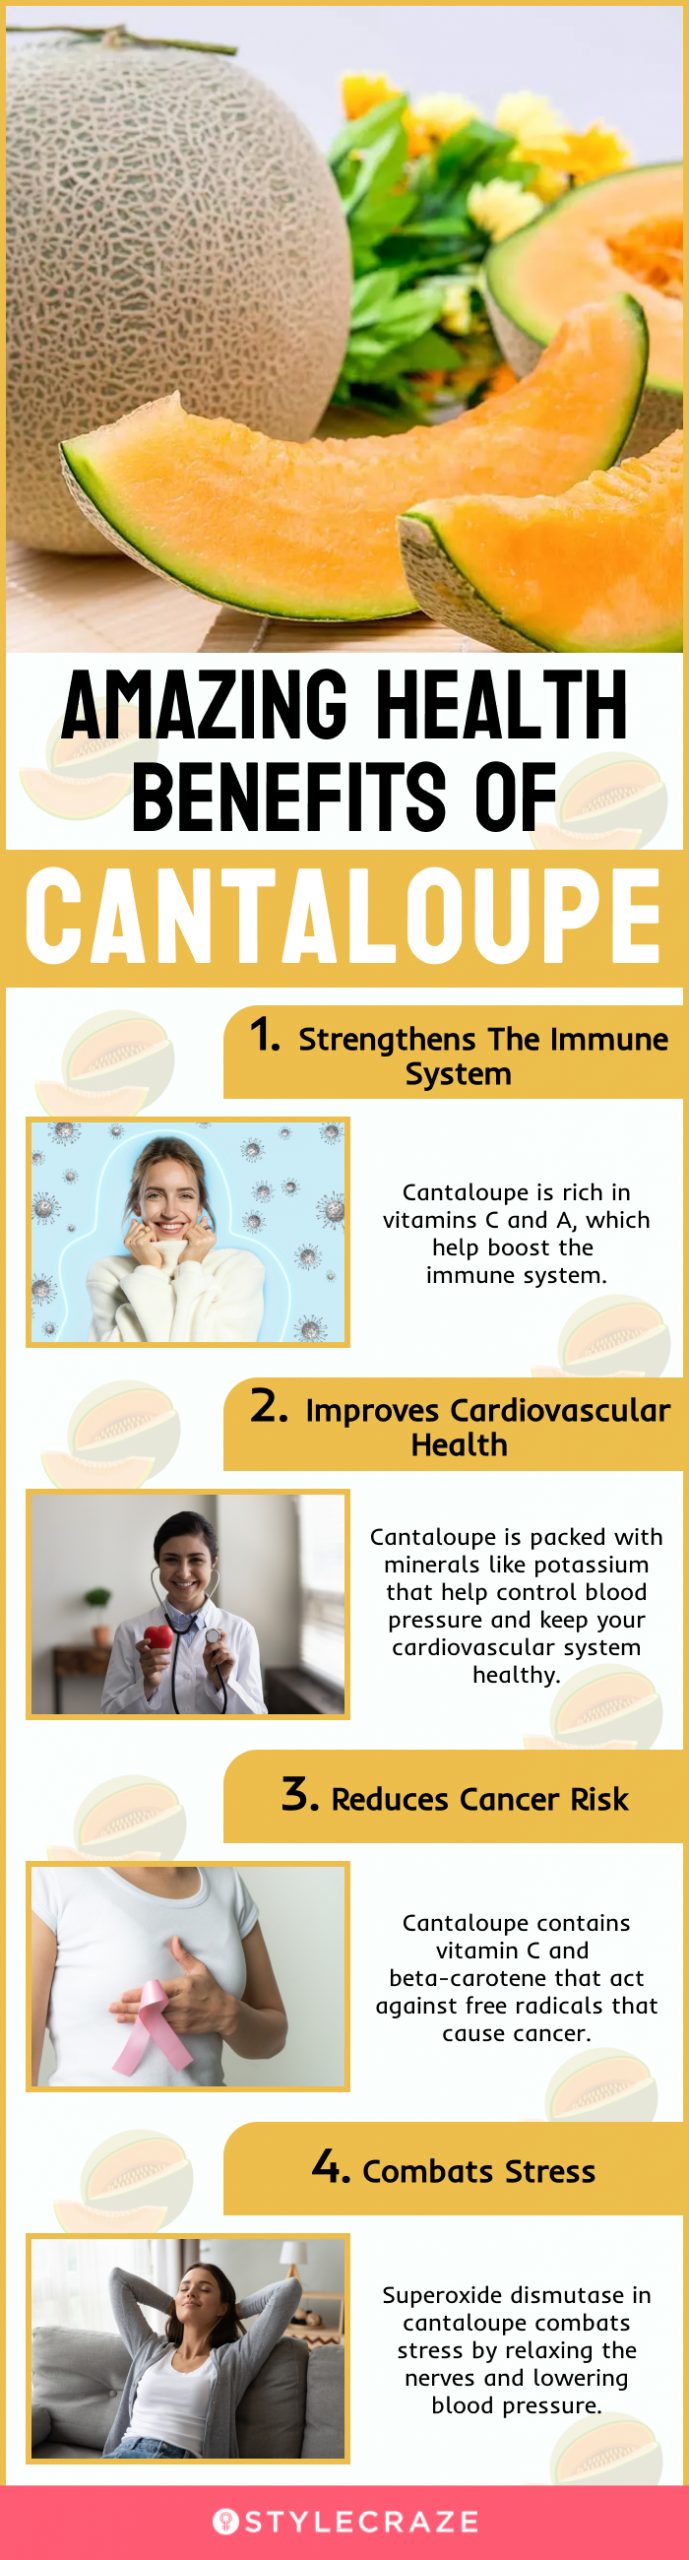 amazing health benefits of cantaloup[infographic]